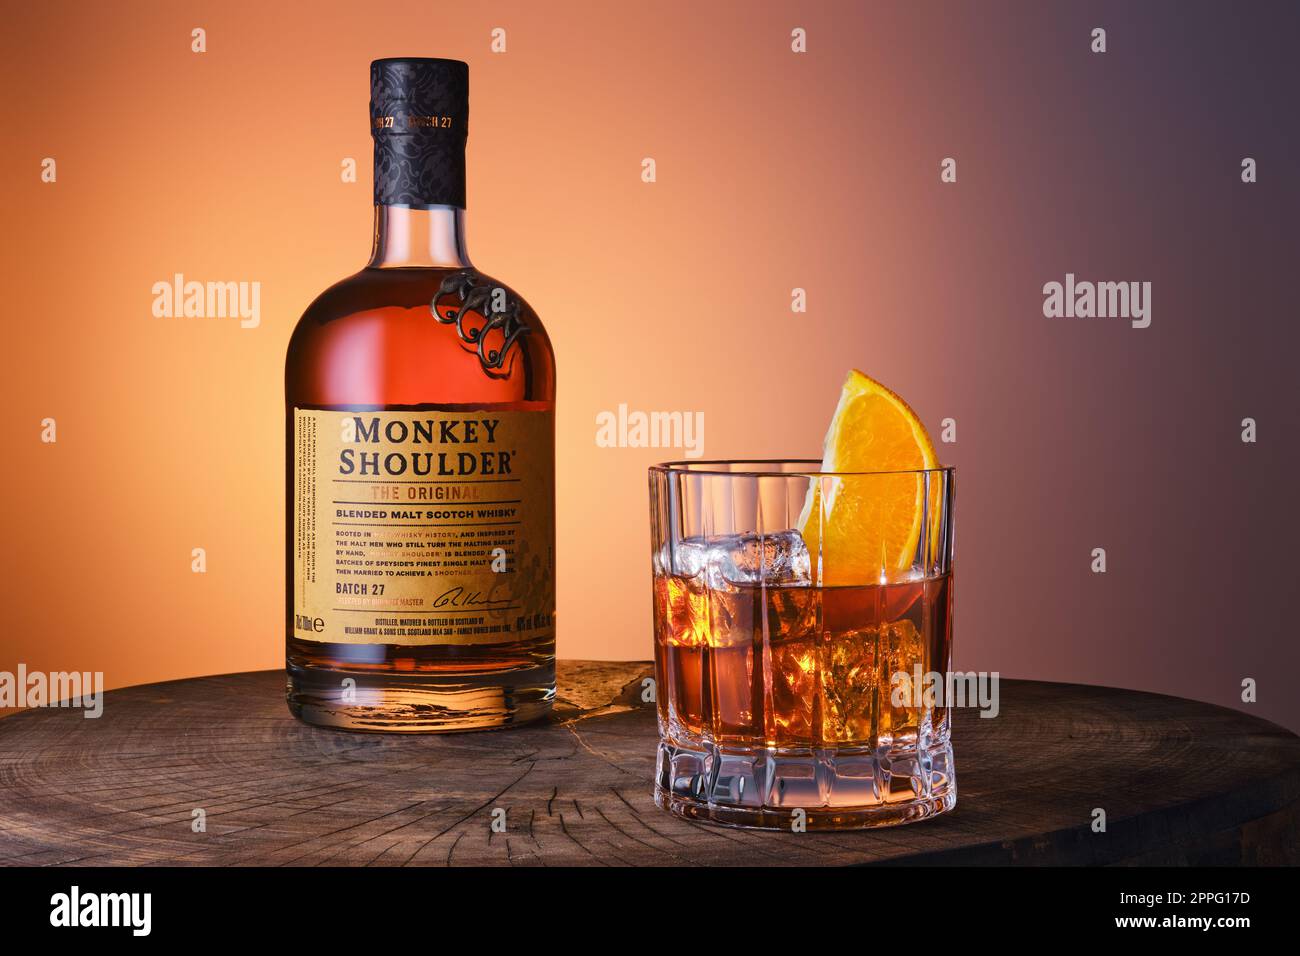 April 8,2022, Minsk, Belarus - bottle and glass with Monkey Shoulder blended malt scotch whisky Stock Photo